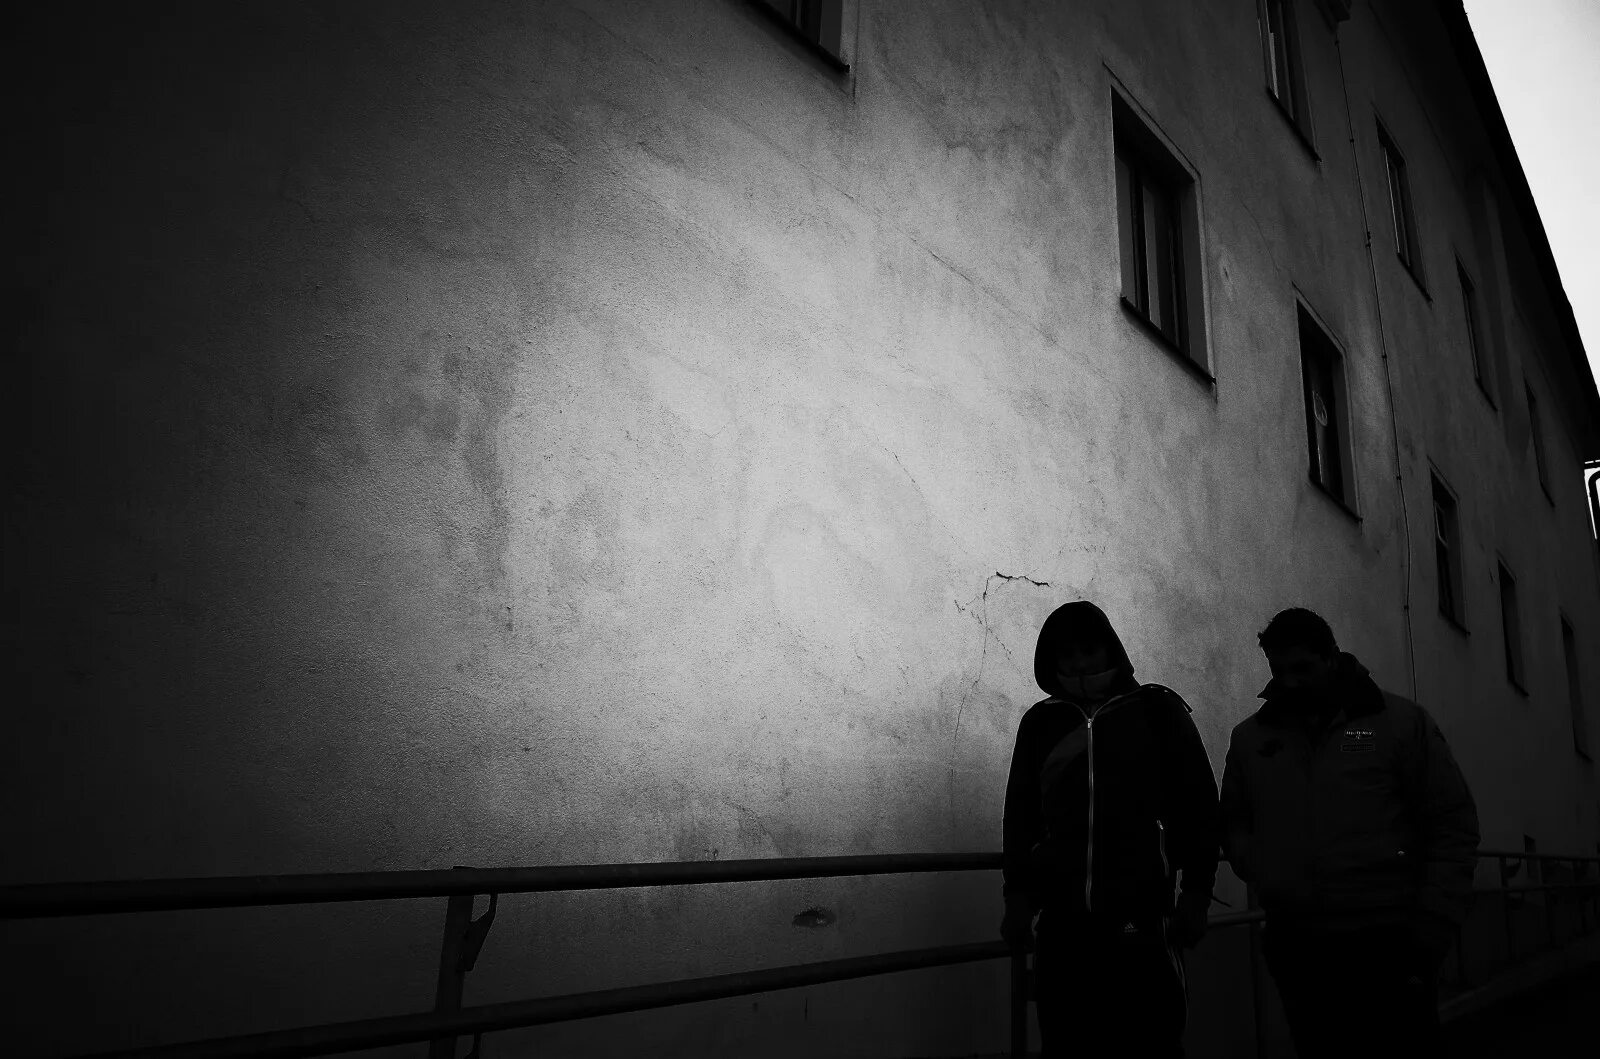 Shadows background. Тень на стене. Тень на стене текстура. Фото с тенью на стене. Тень на темной стене\.